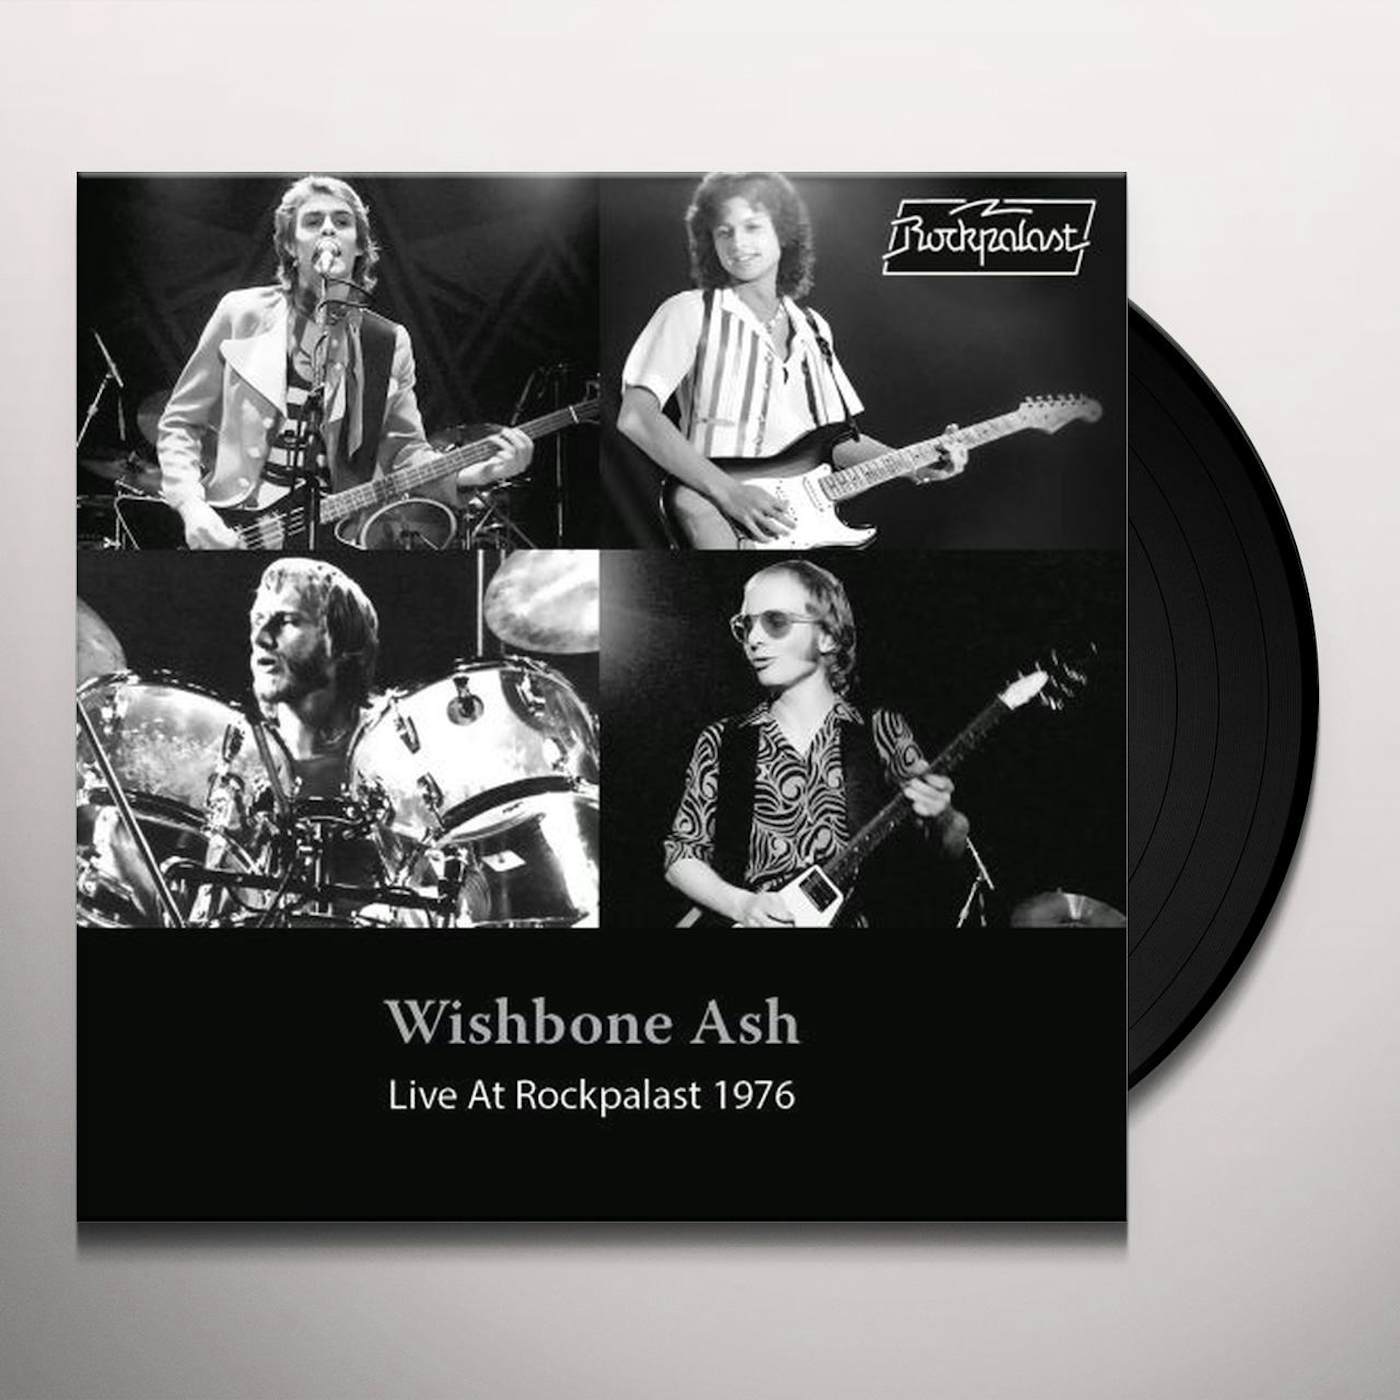 Logo Music Wishbone Ash Classic Clock for Sale by claytonwalters